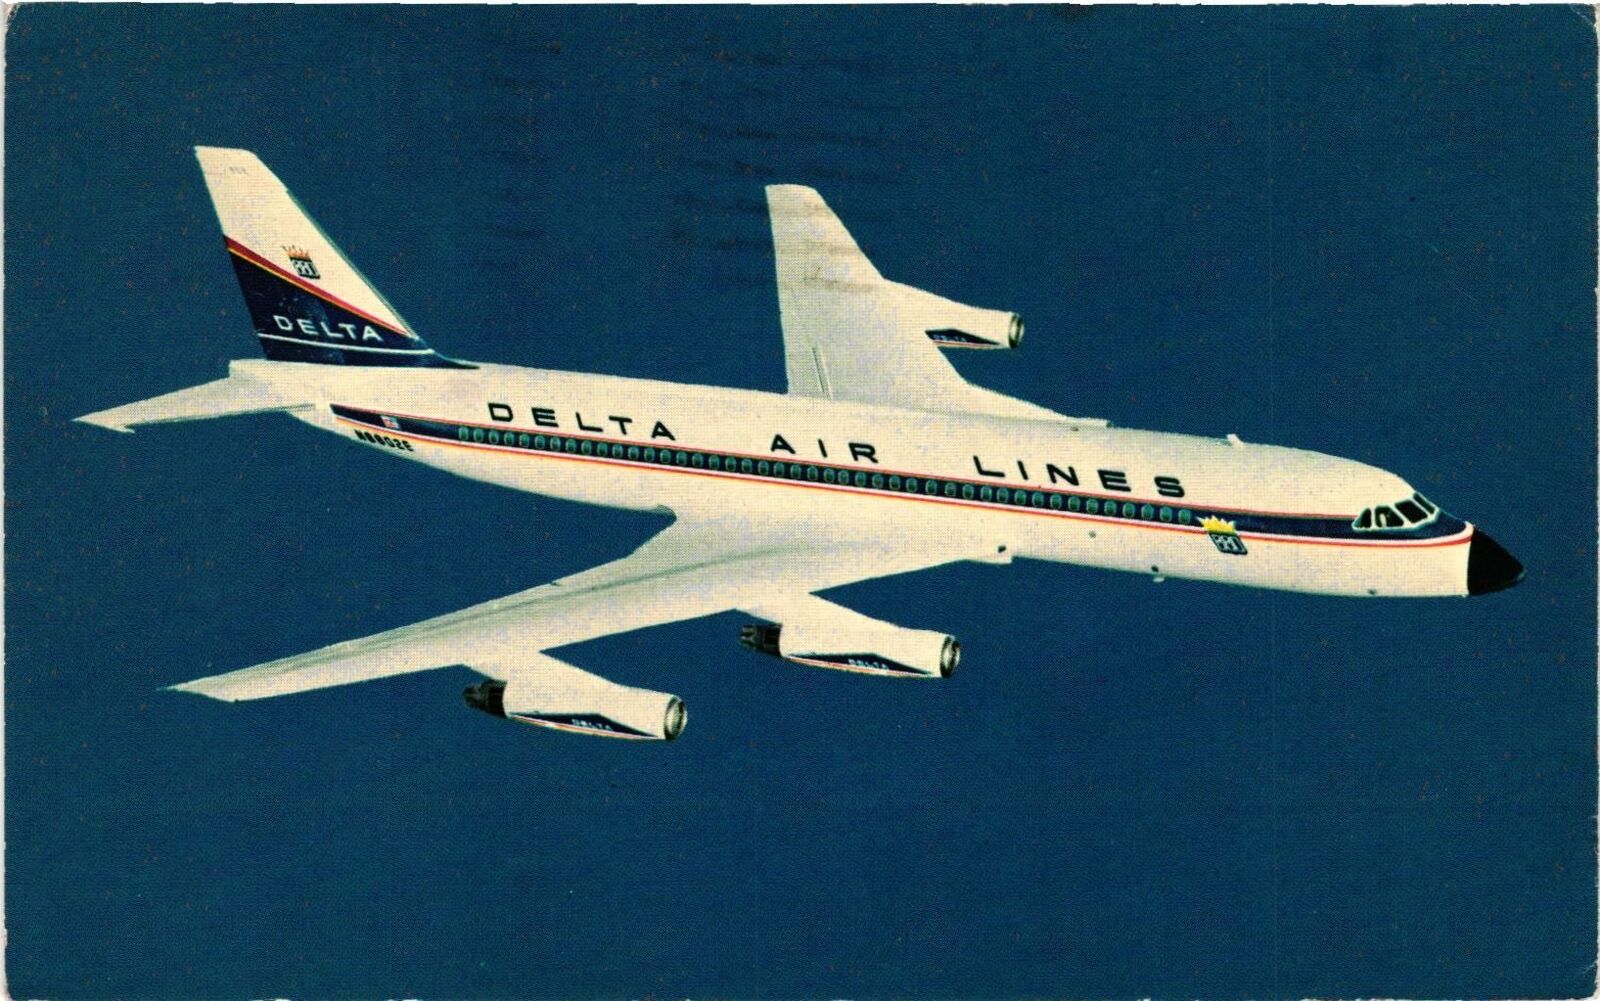 Vintage Postcard- Delta Air Lines Jet. 1960s